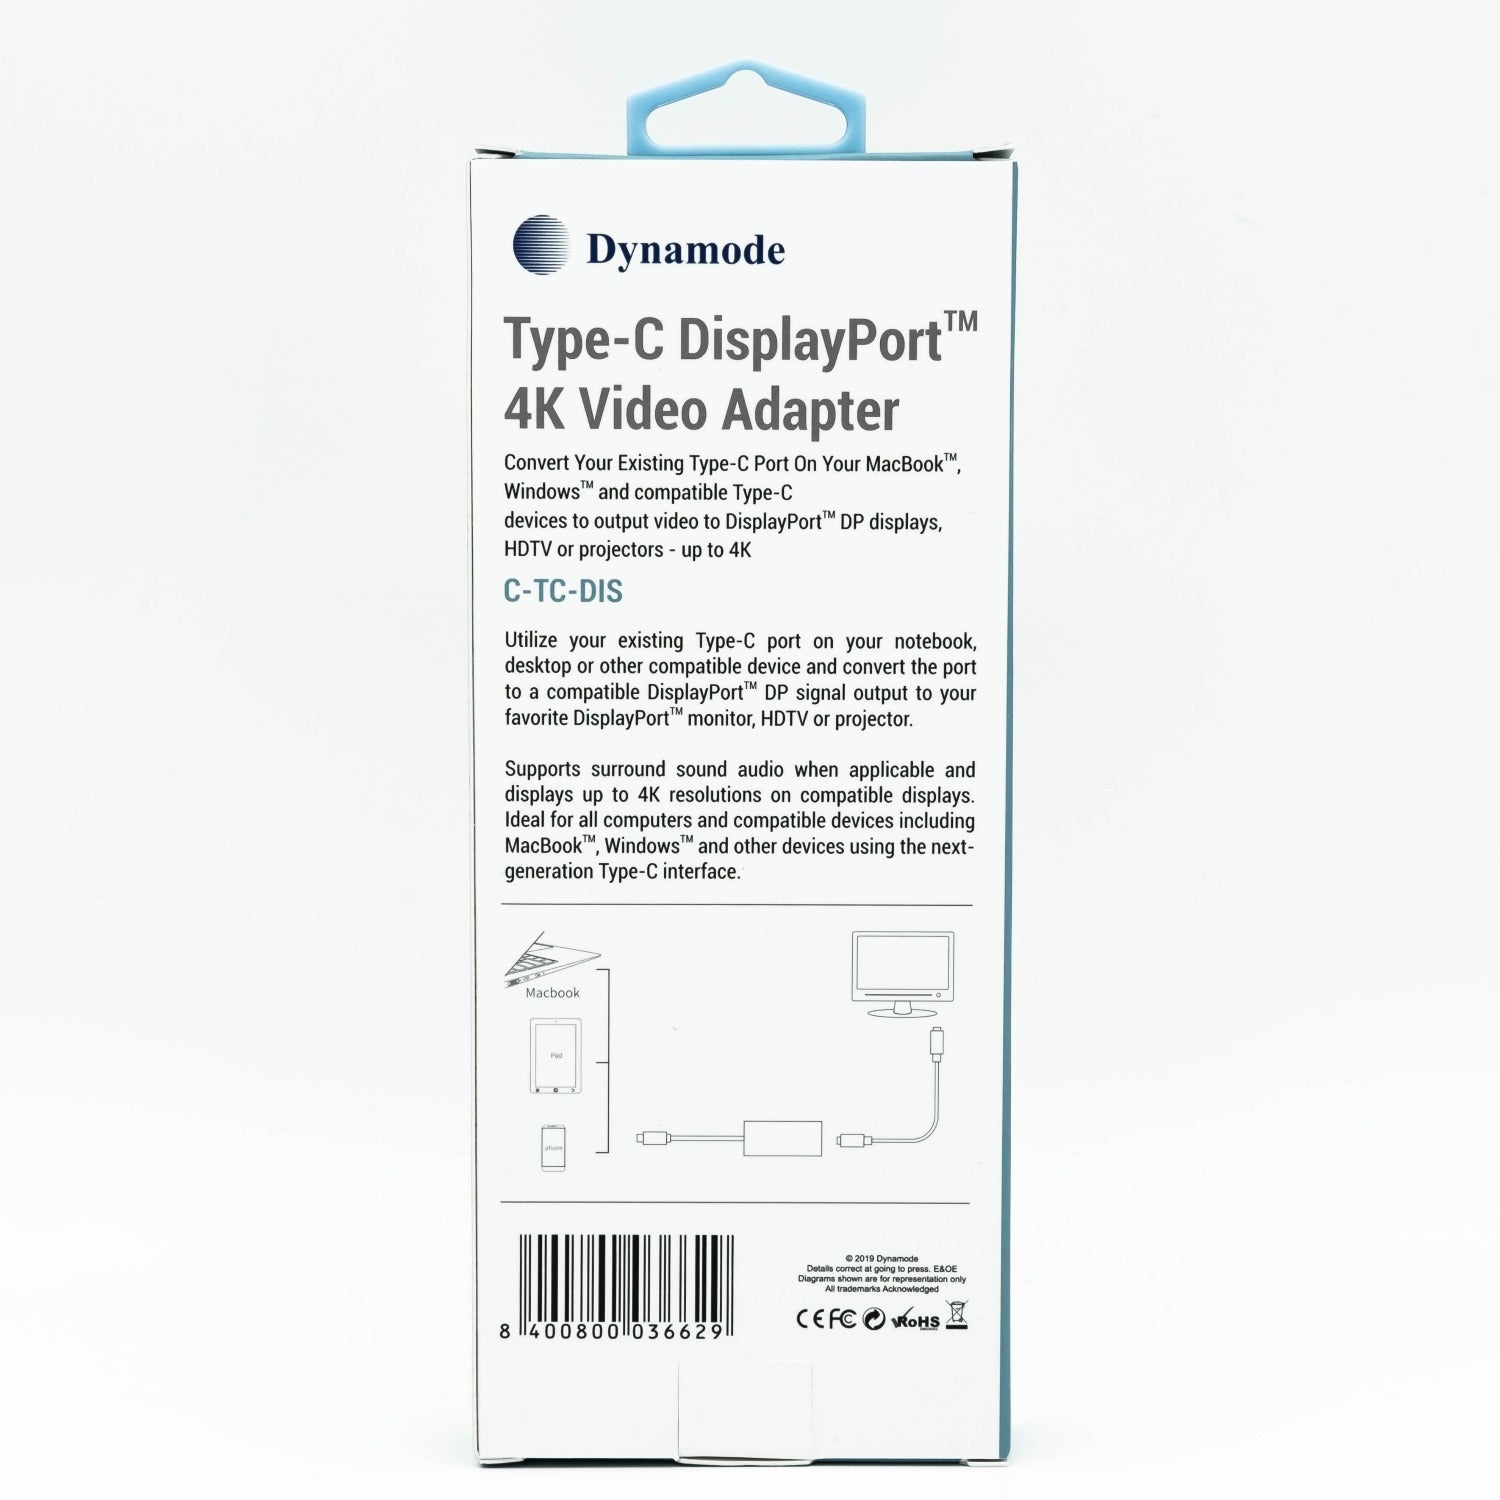 USB3.0 Type-C to Display Port Adapter - Netbit UK